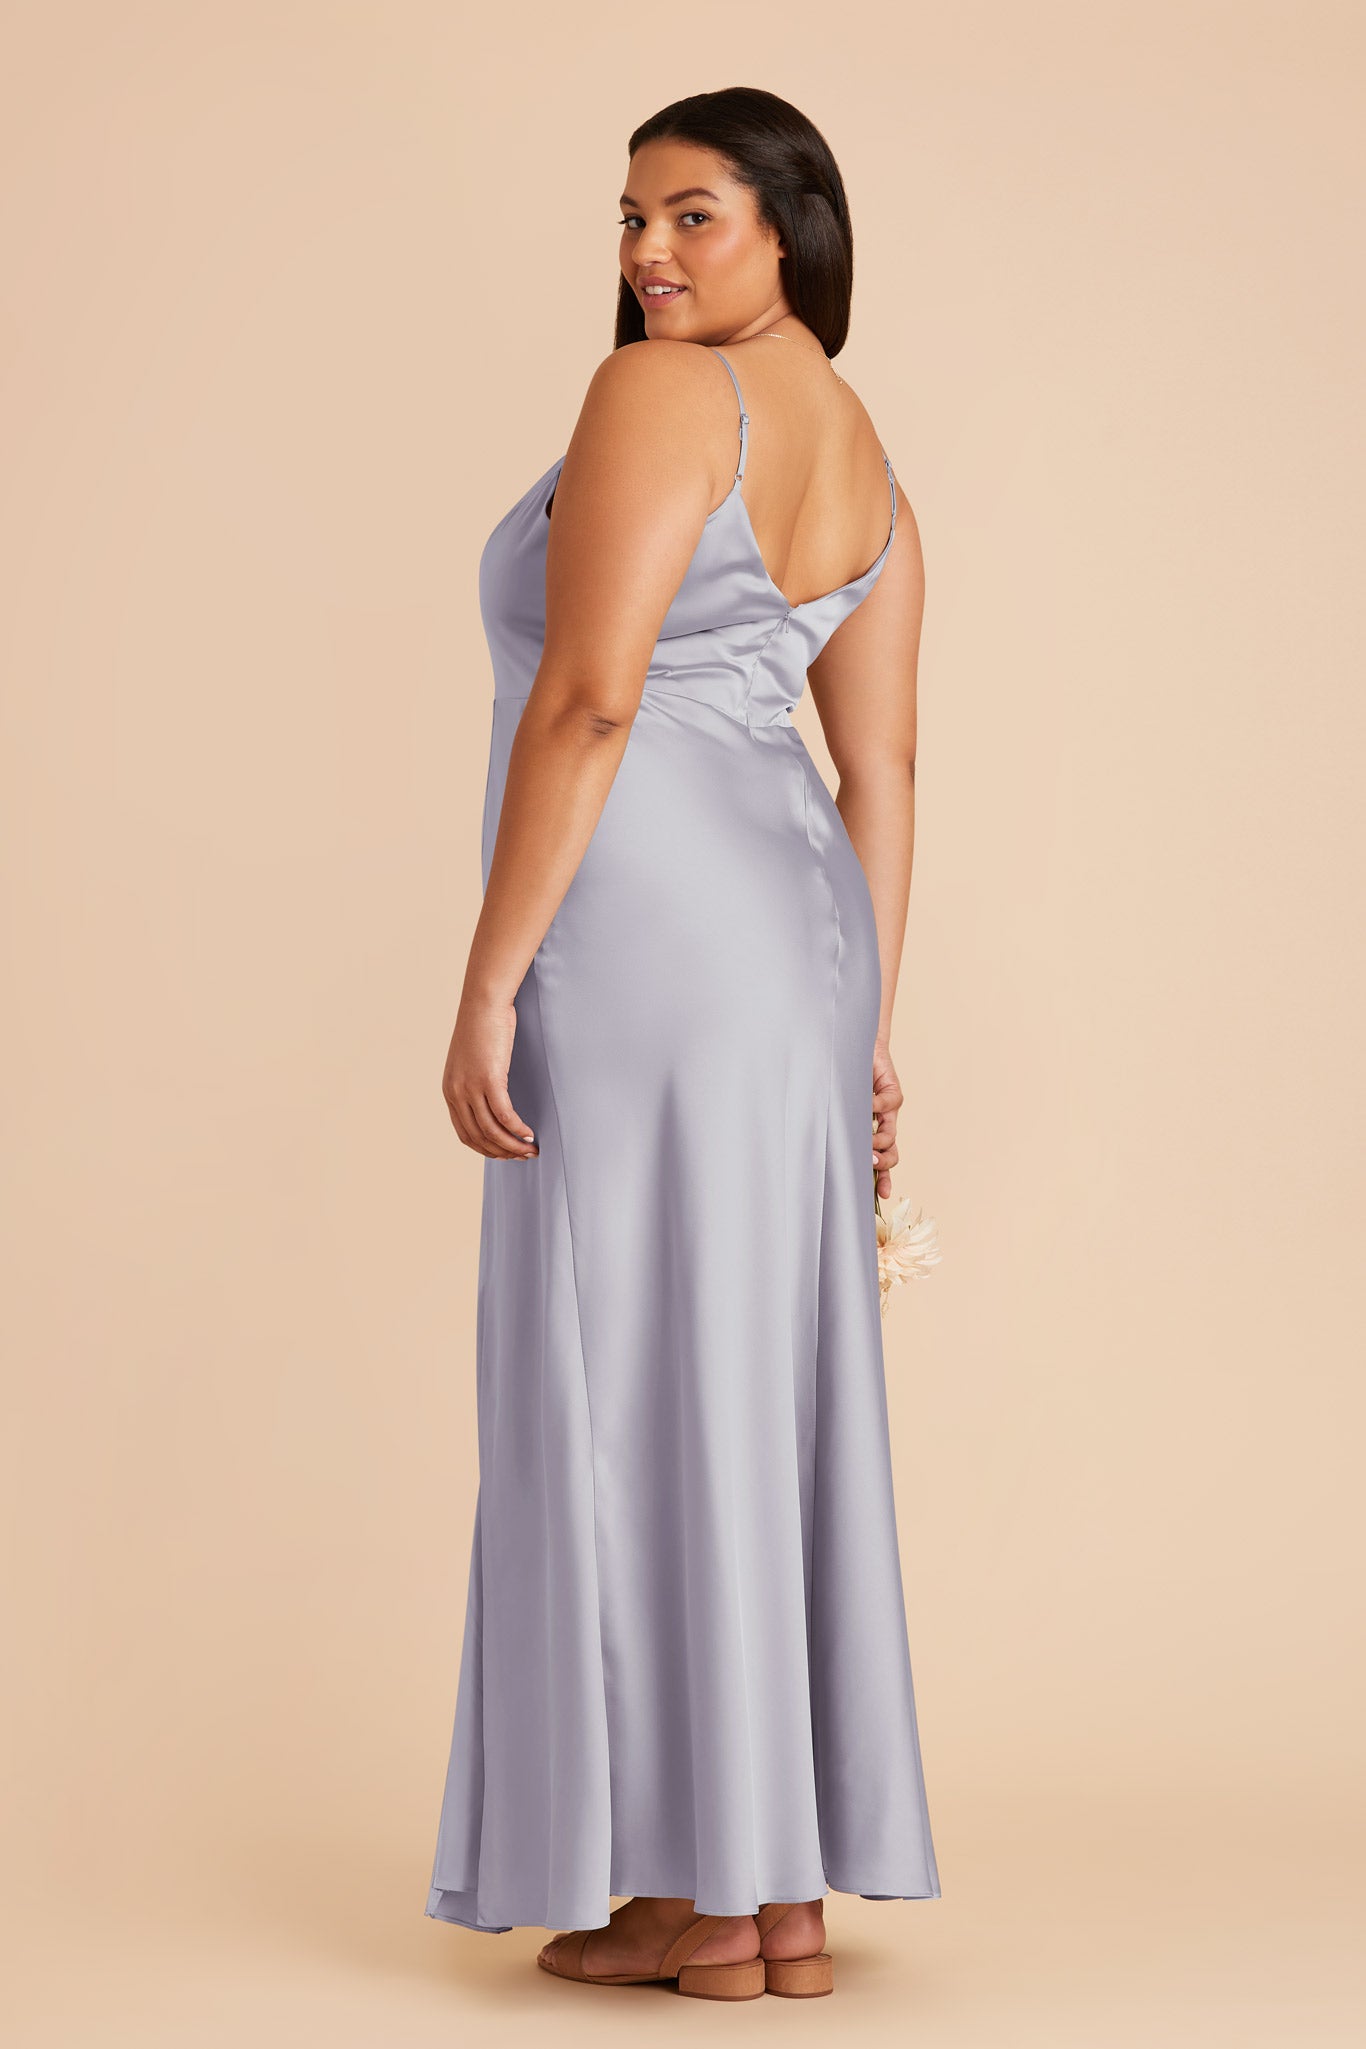 Periwinkle Blue Jay Matte Satin Dress by Birdy Grey